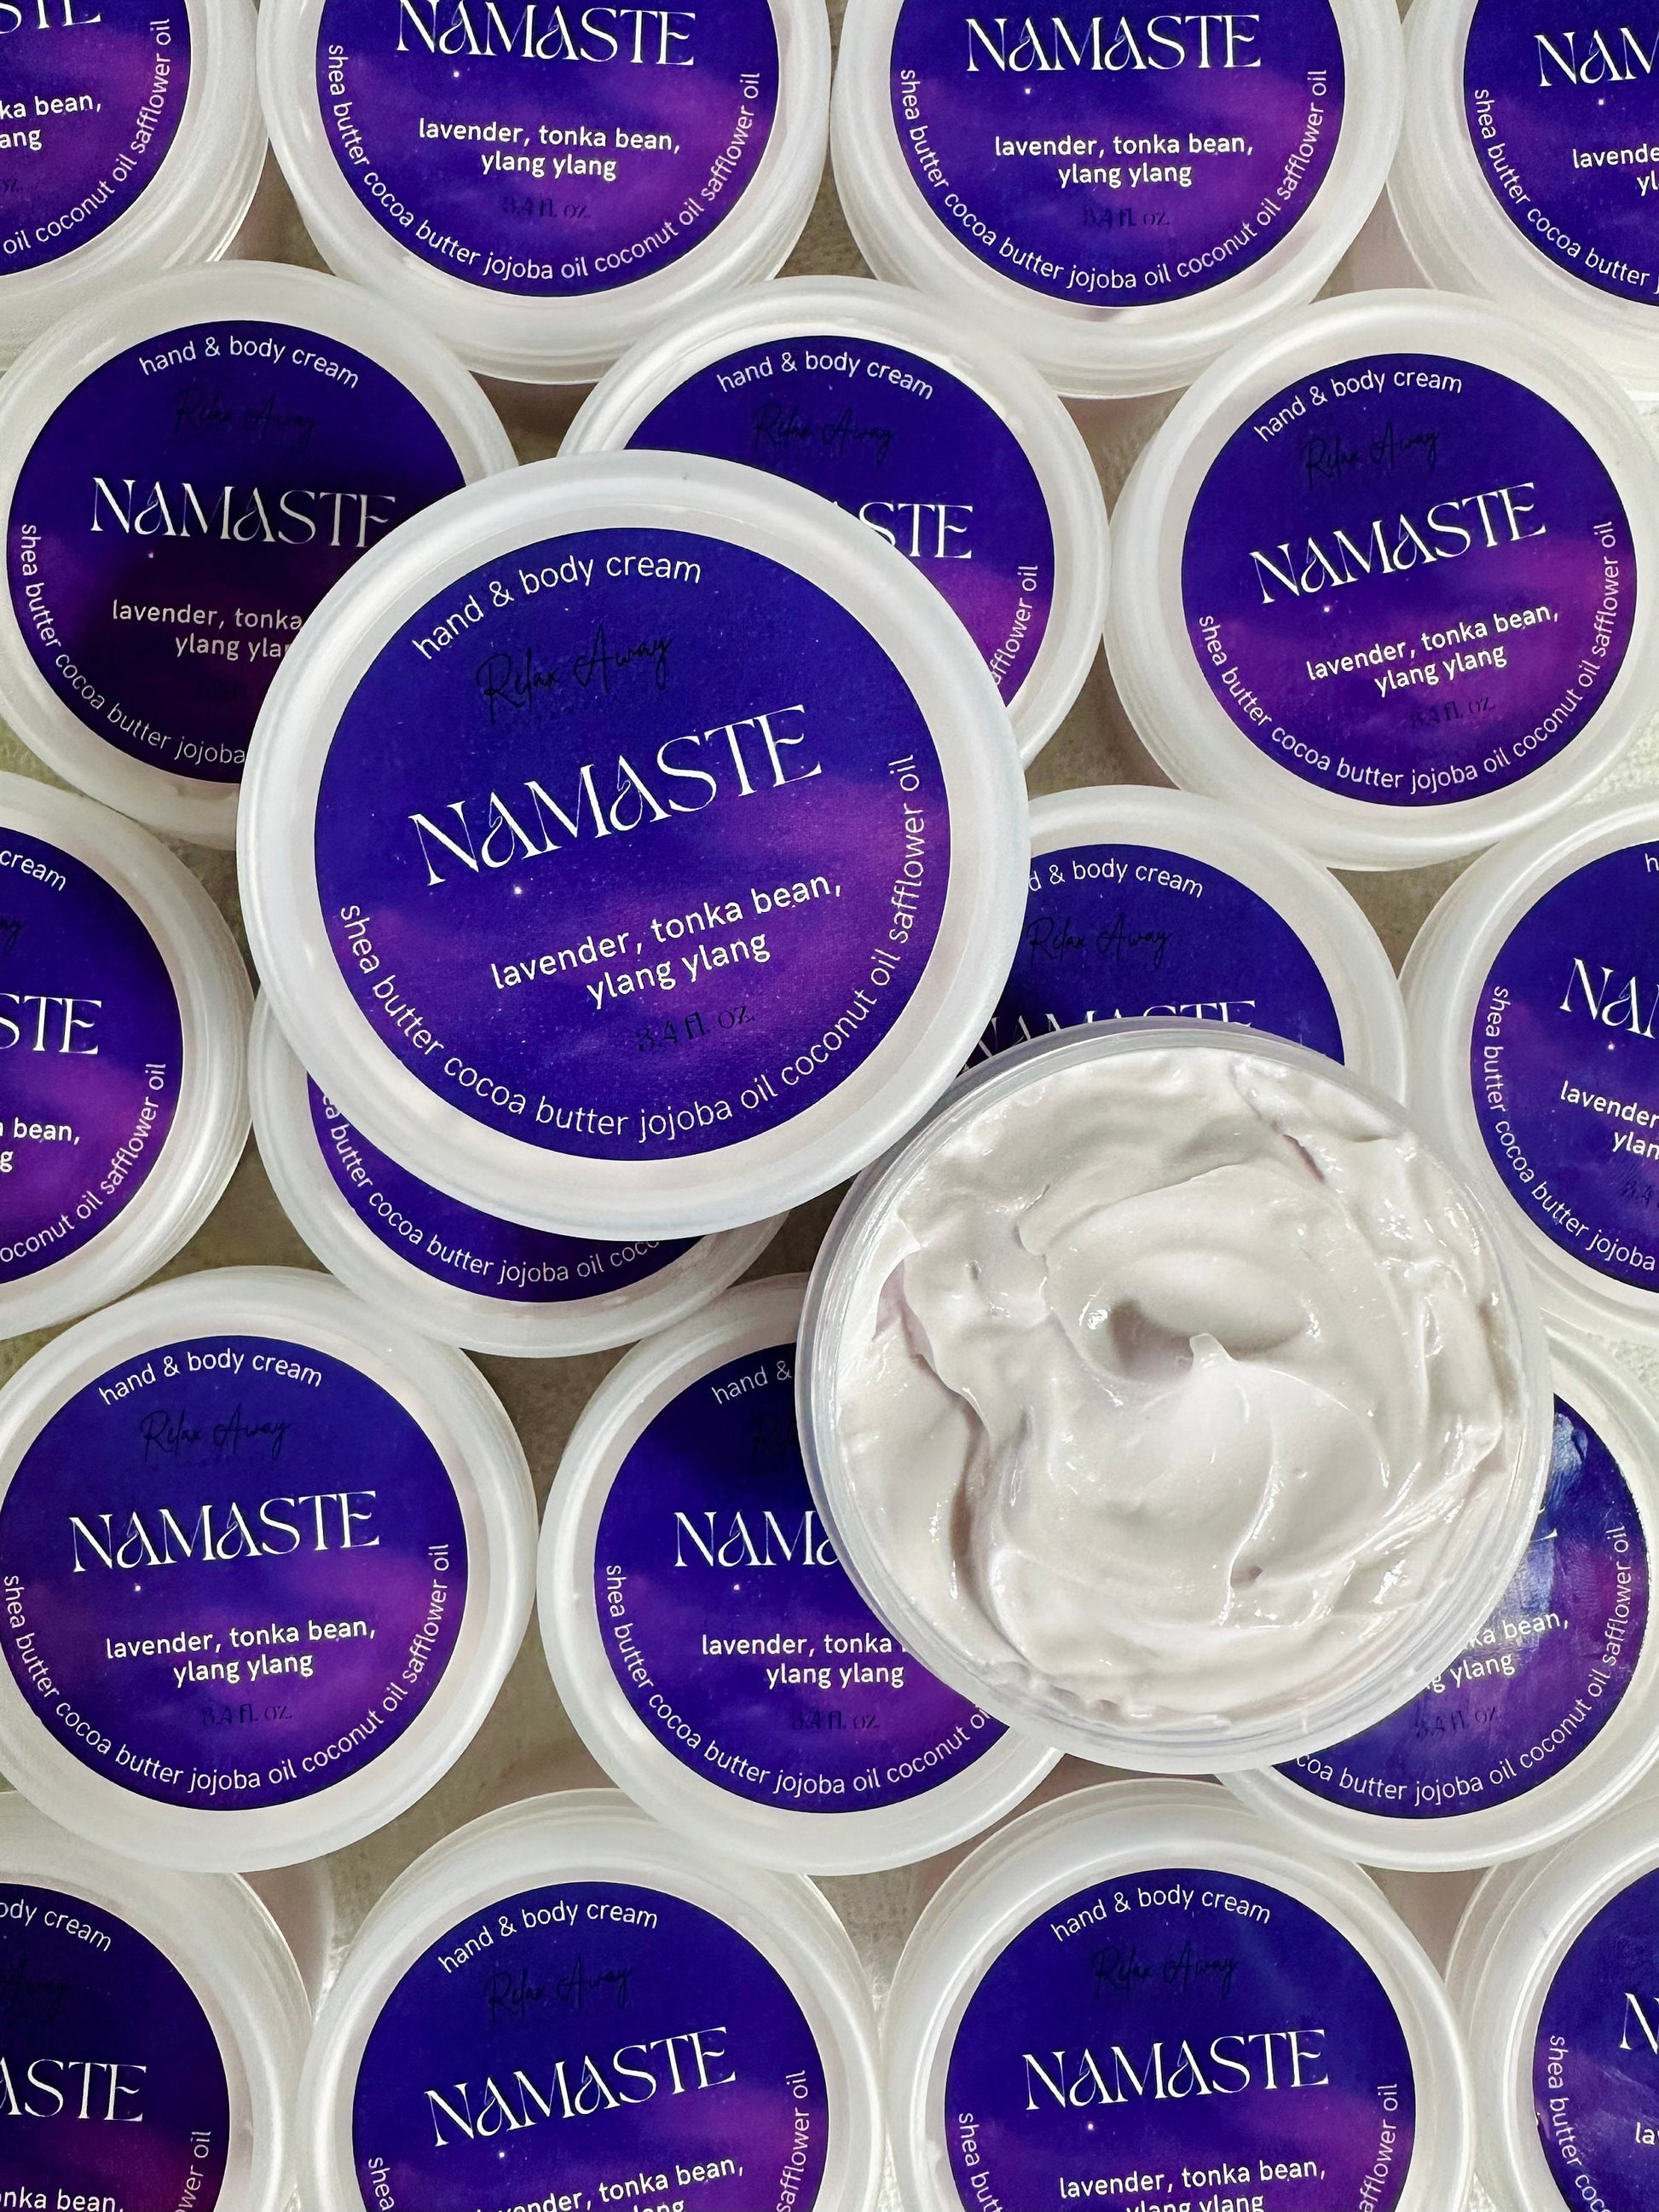 Namaste Hand & Body Cream Lotion | Skin Care | Moisturize  | Spa Gift | Gift for her | Body Butter